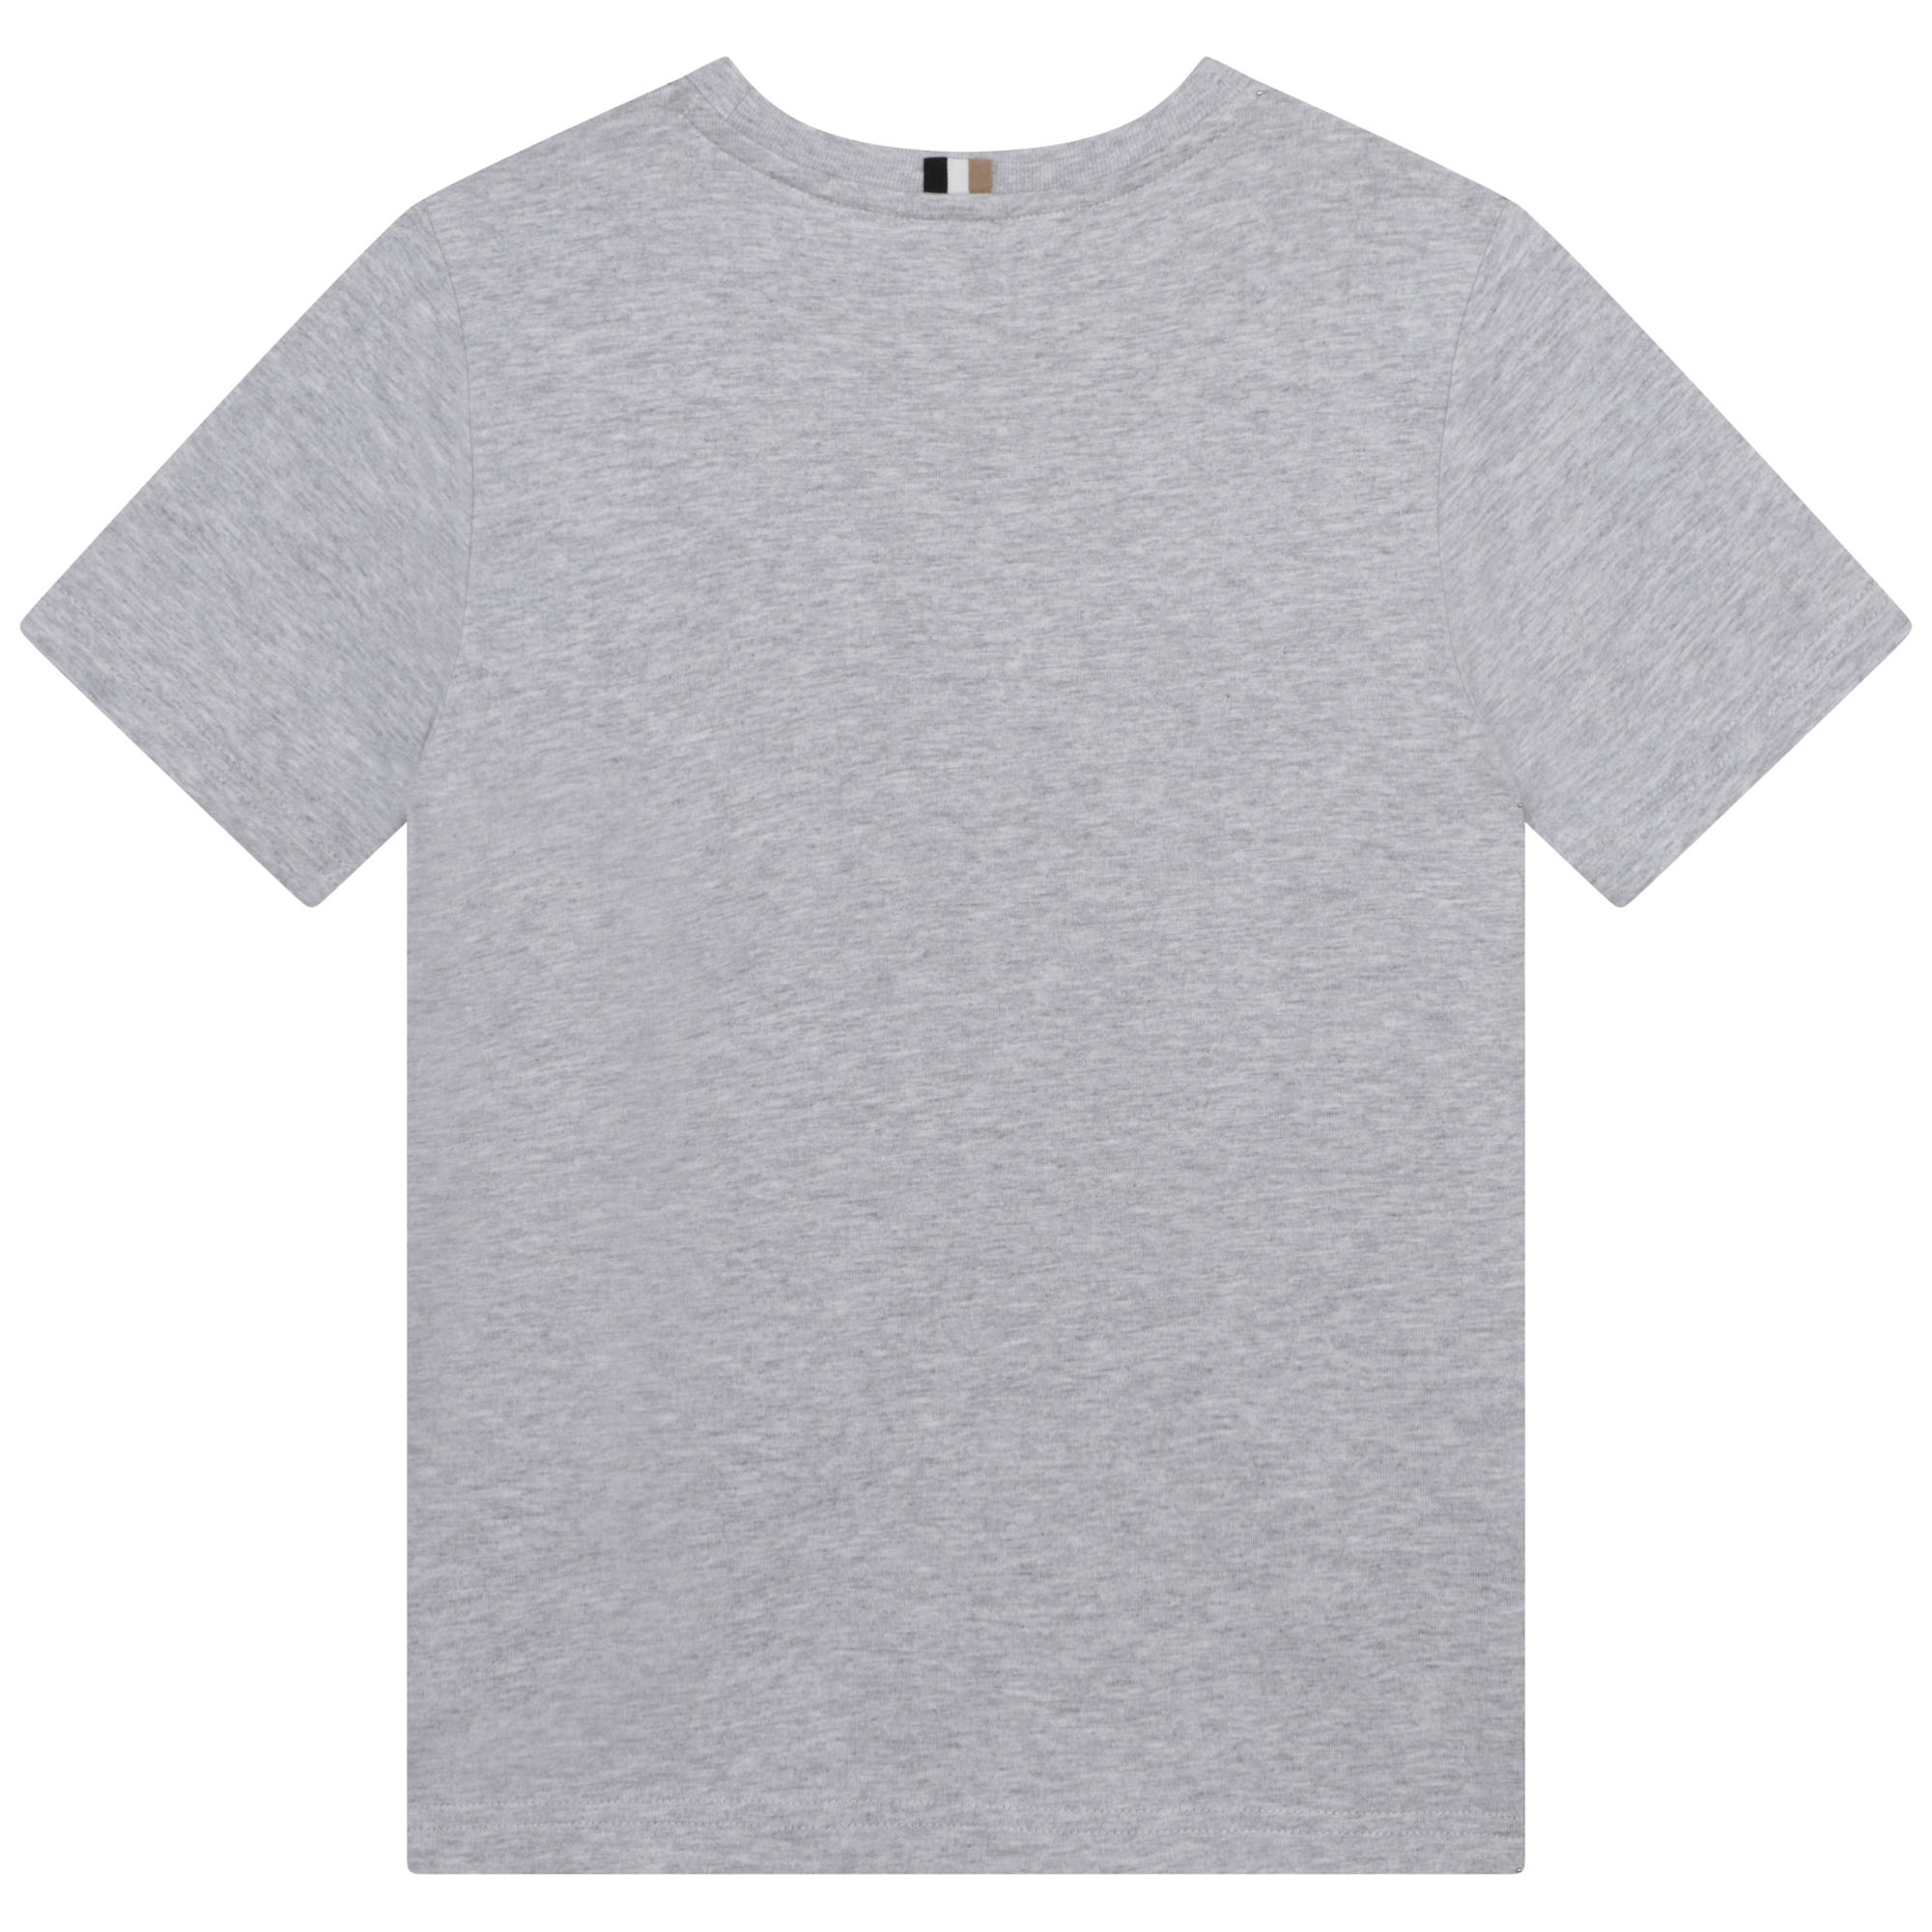 T-shirt with tennis print BOSS for BOY